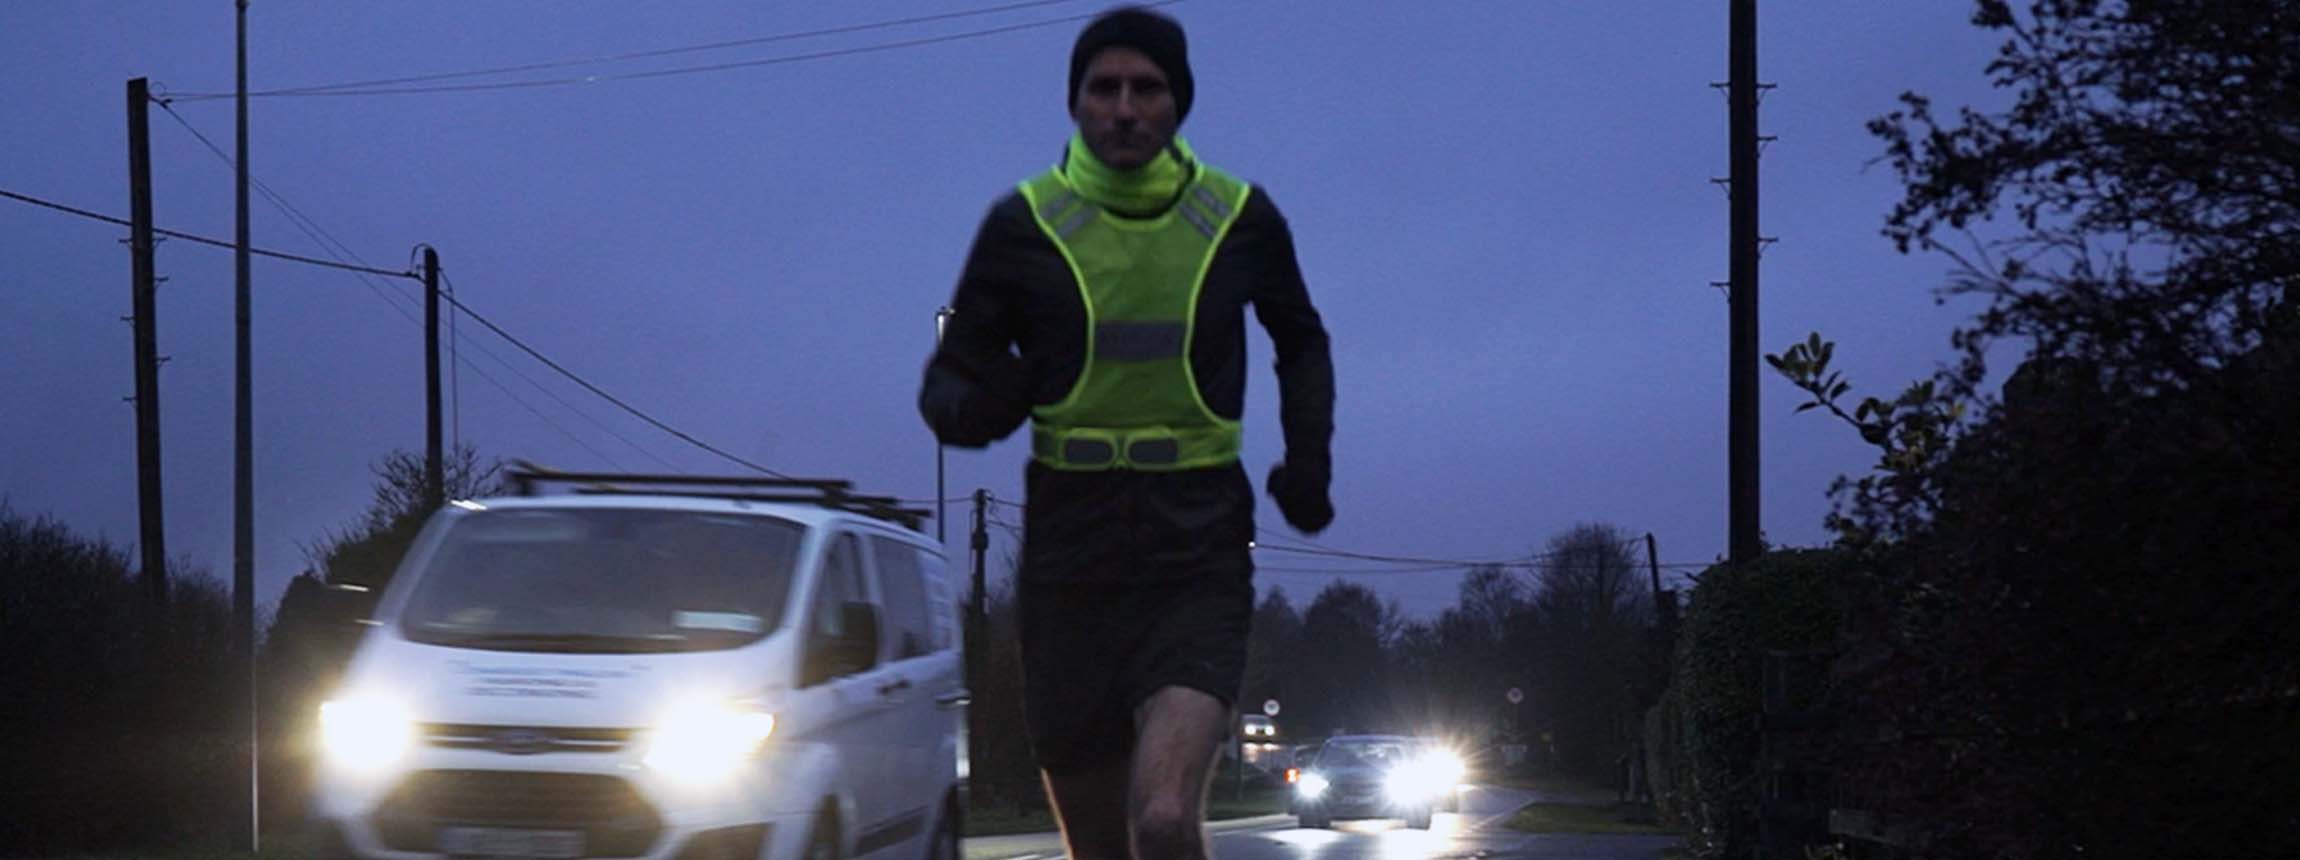 Runner wearing bodylite reflective vest